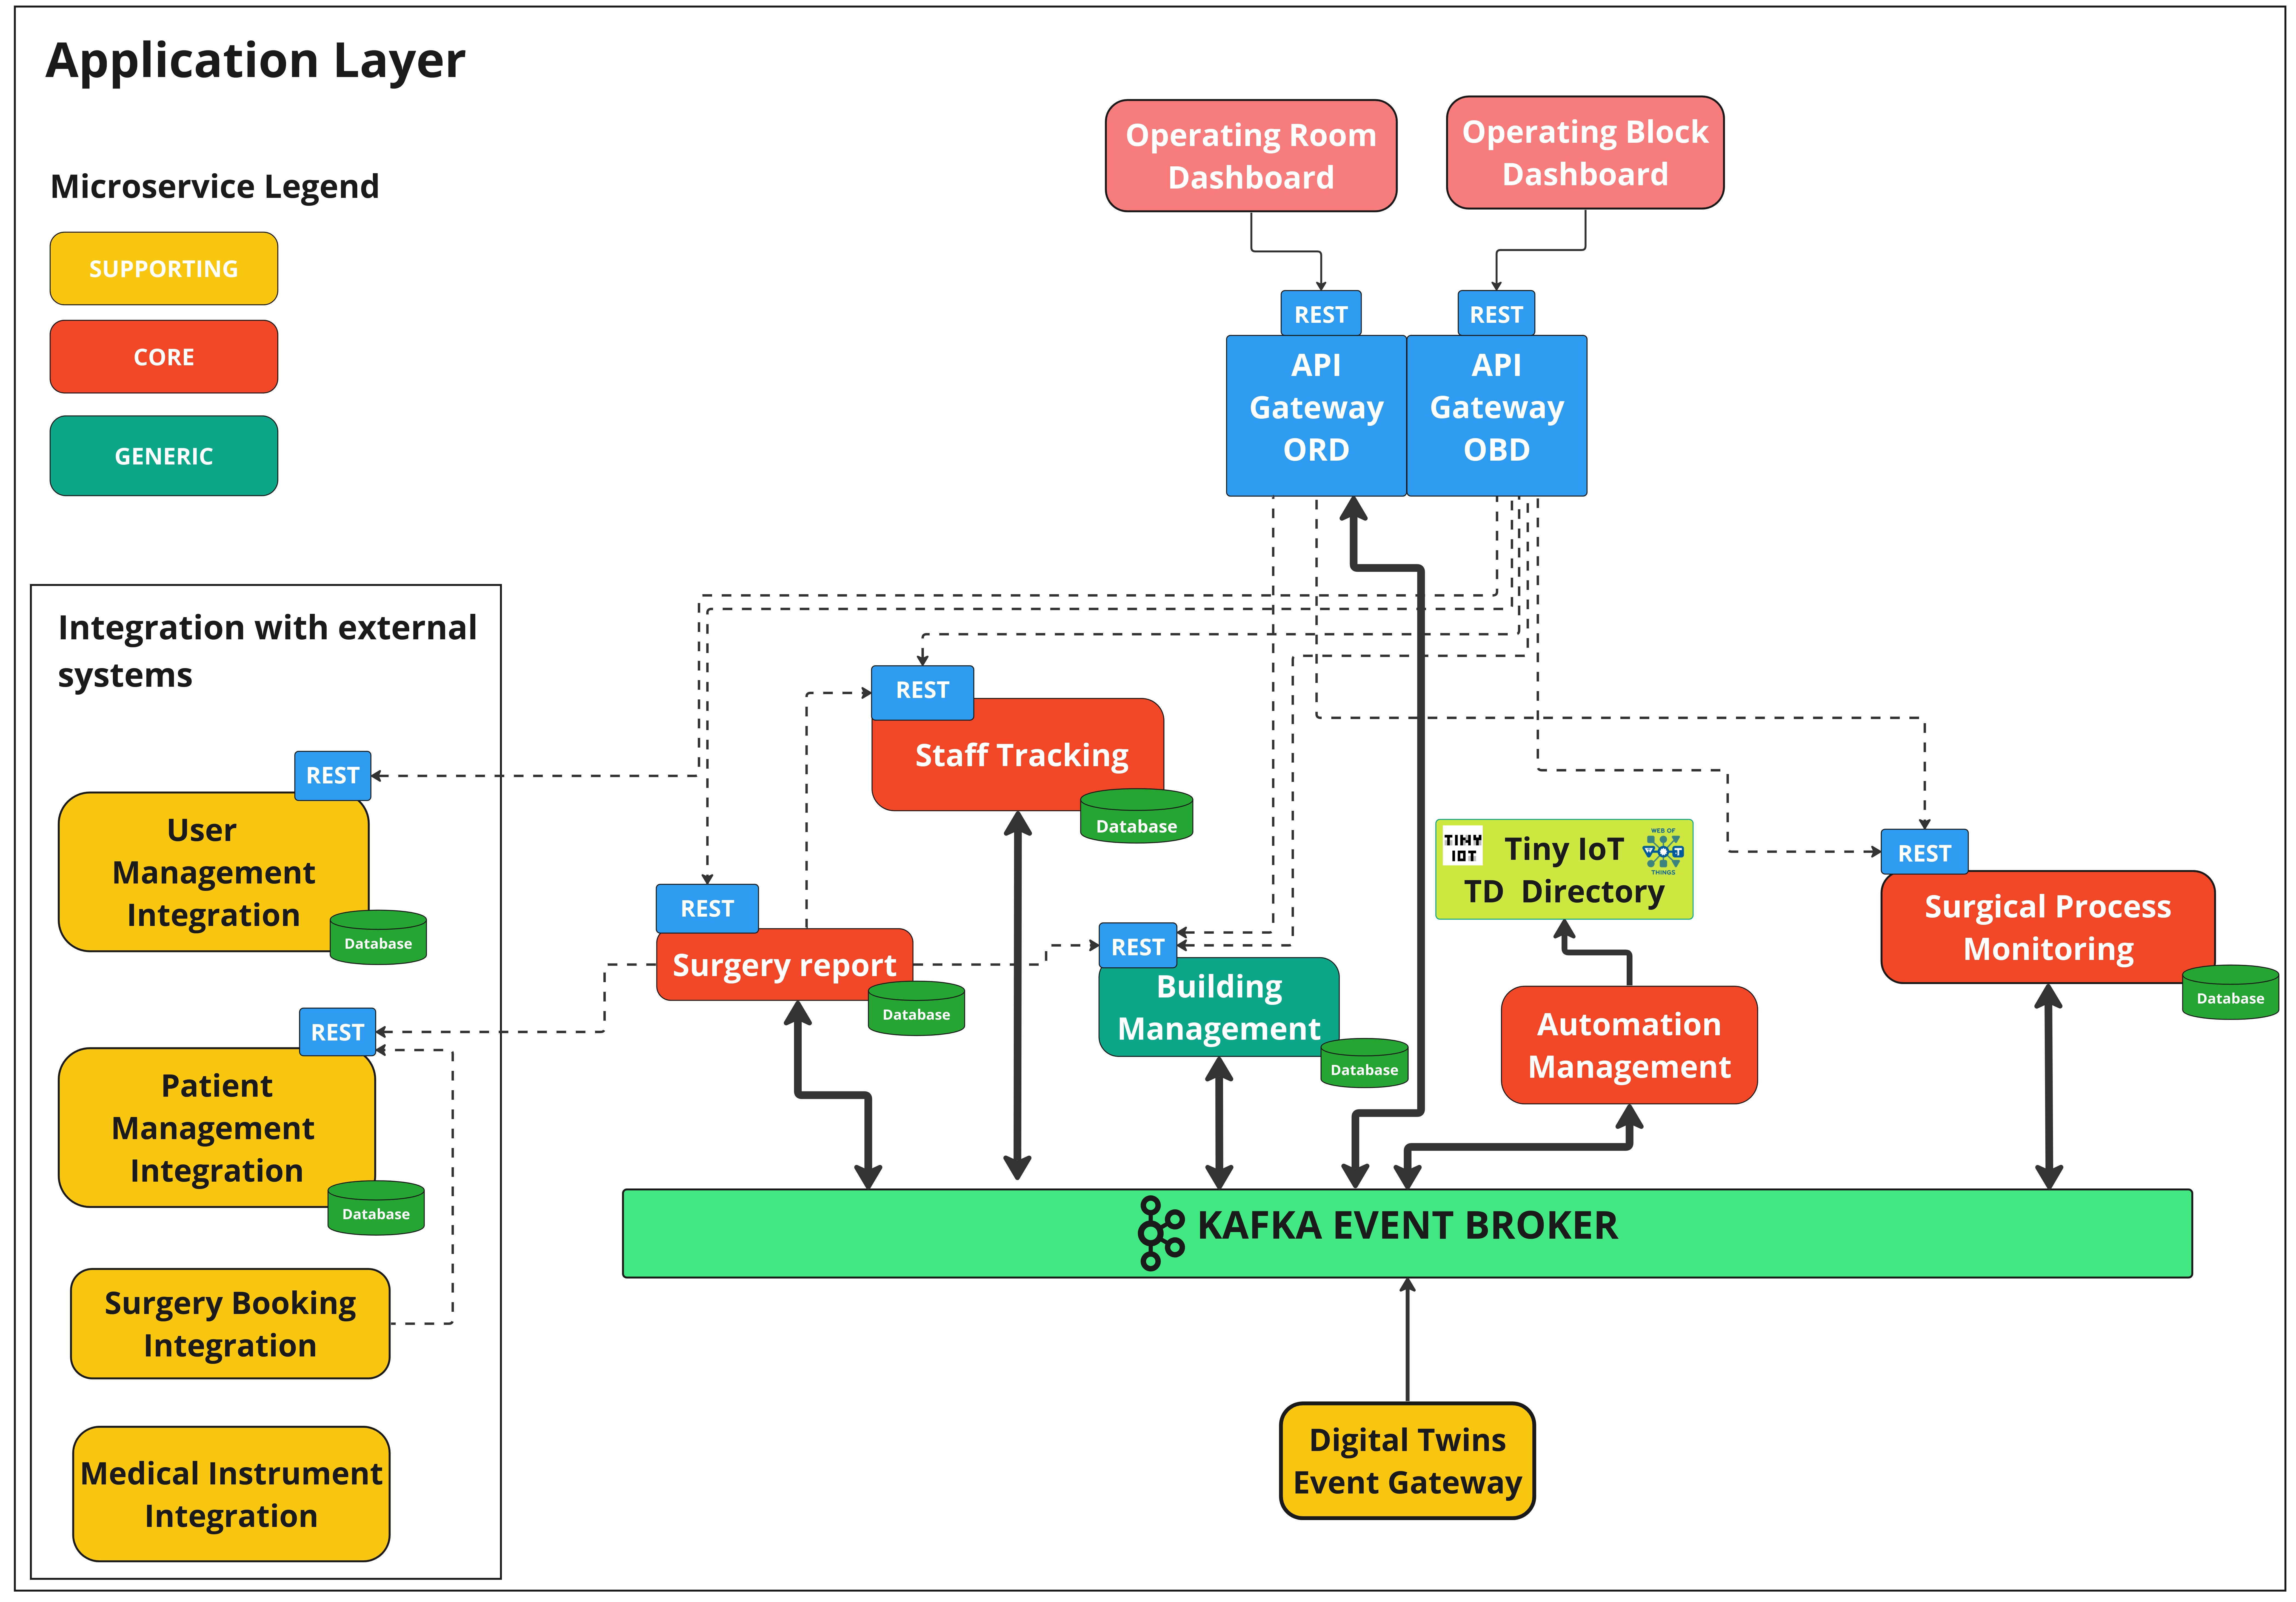 Application Layer Architecture schema